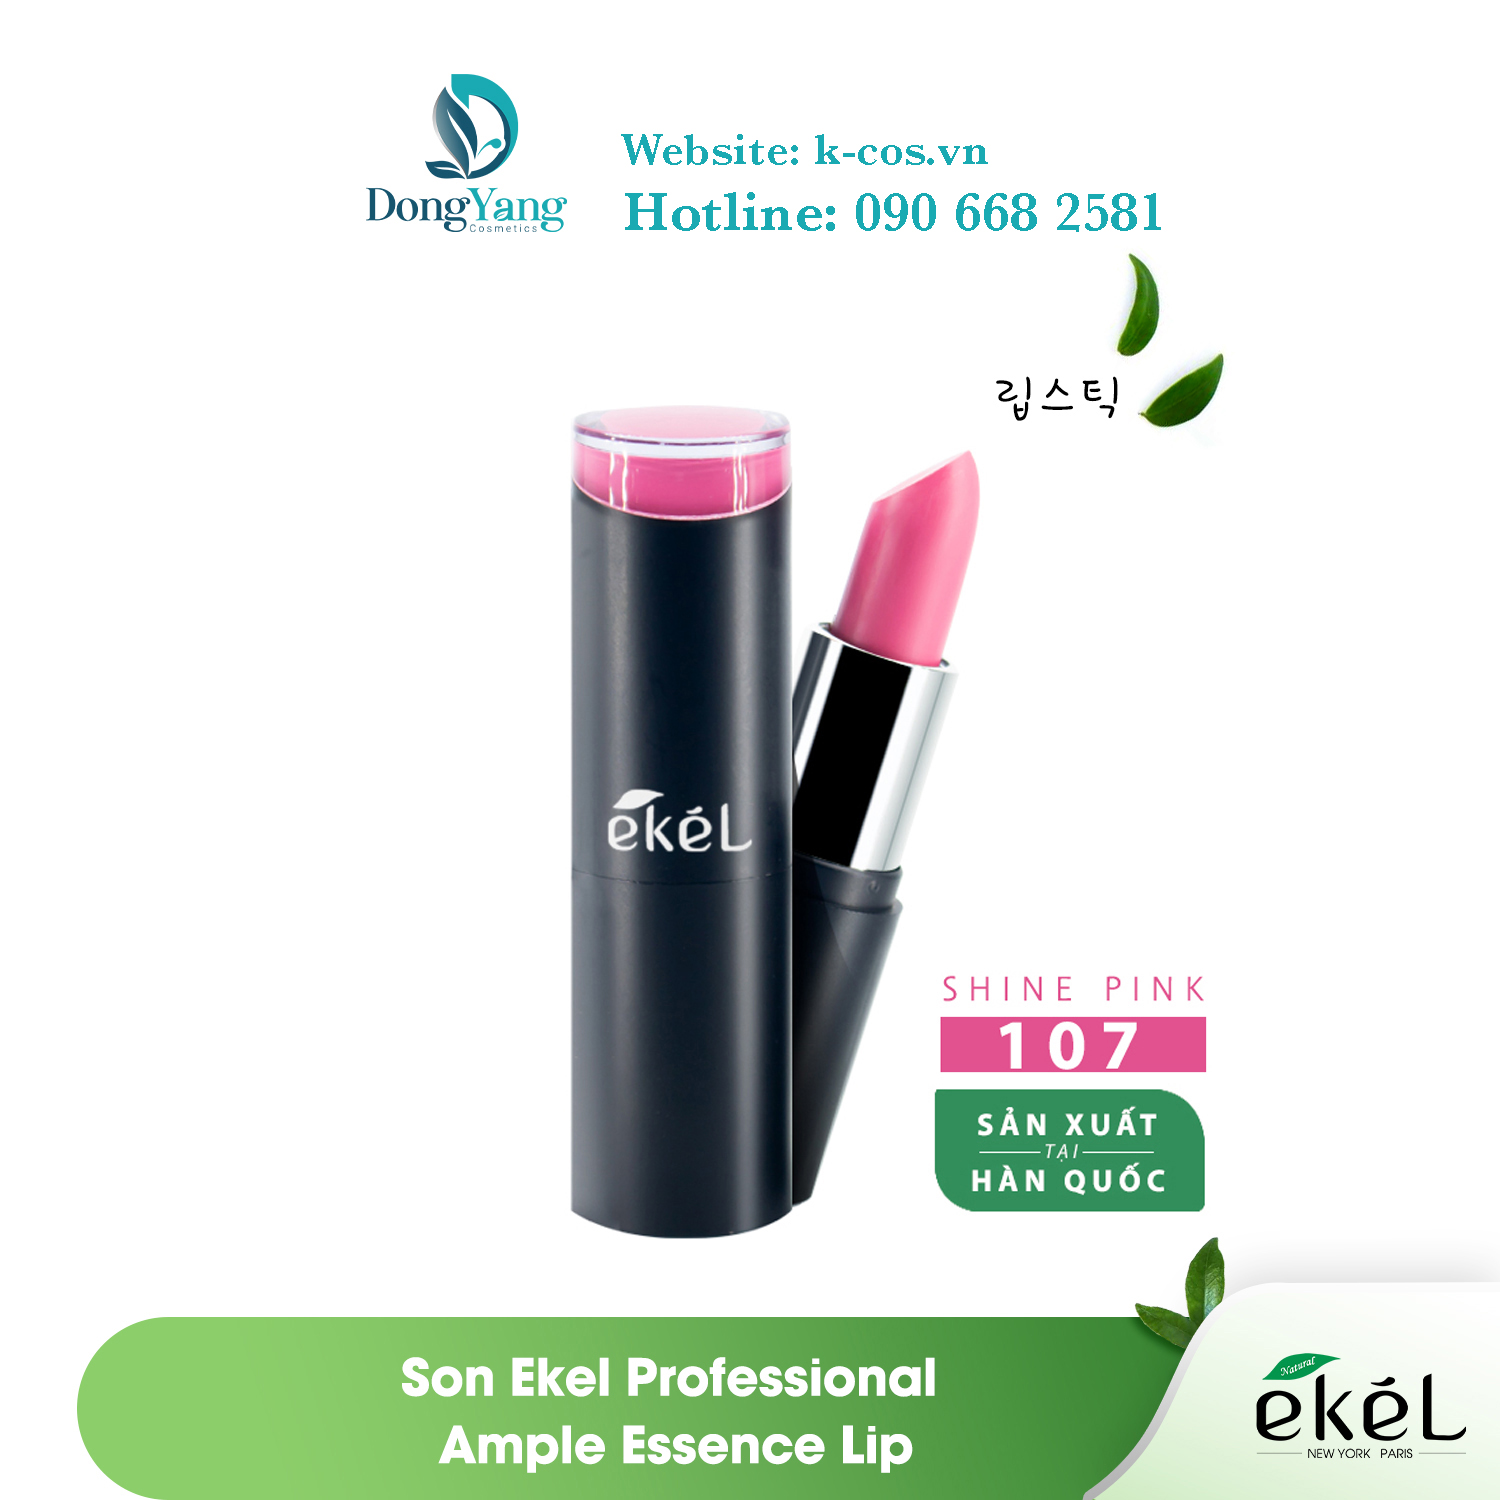  Son màu hồng bayby Ekel Professional Ample Essence Lip (107 - Shine Pink)